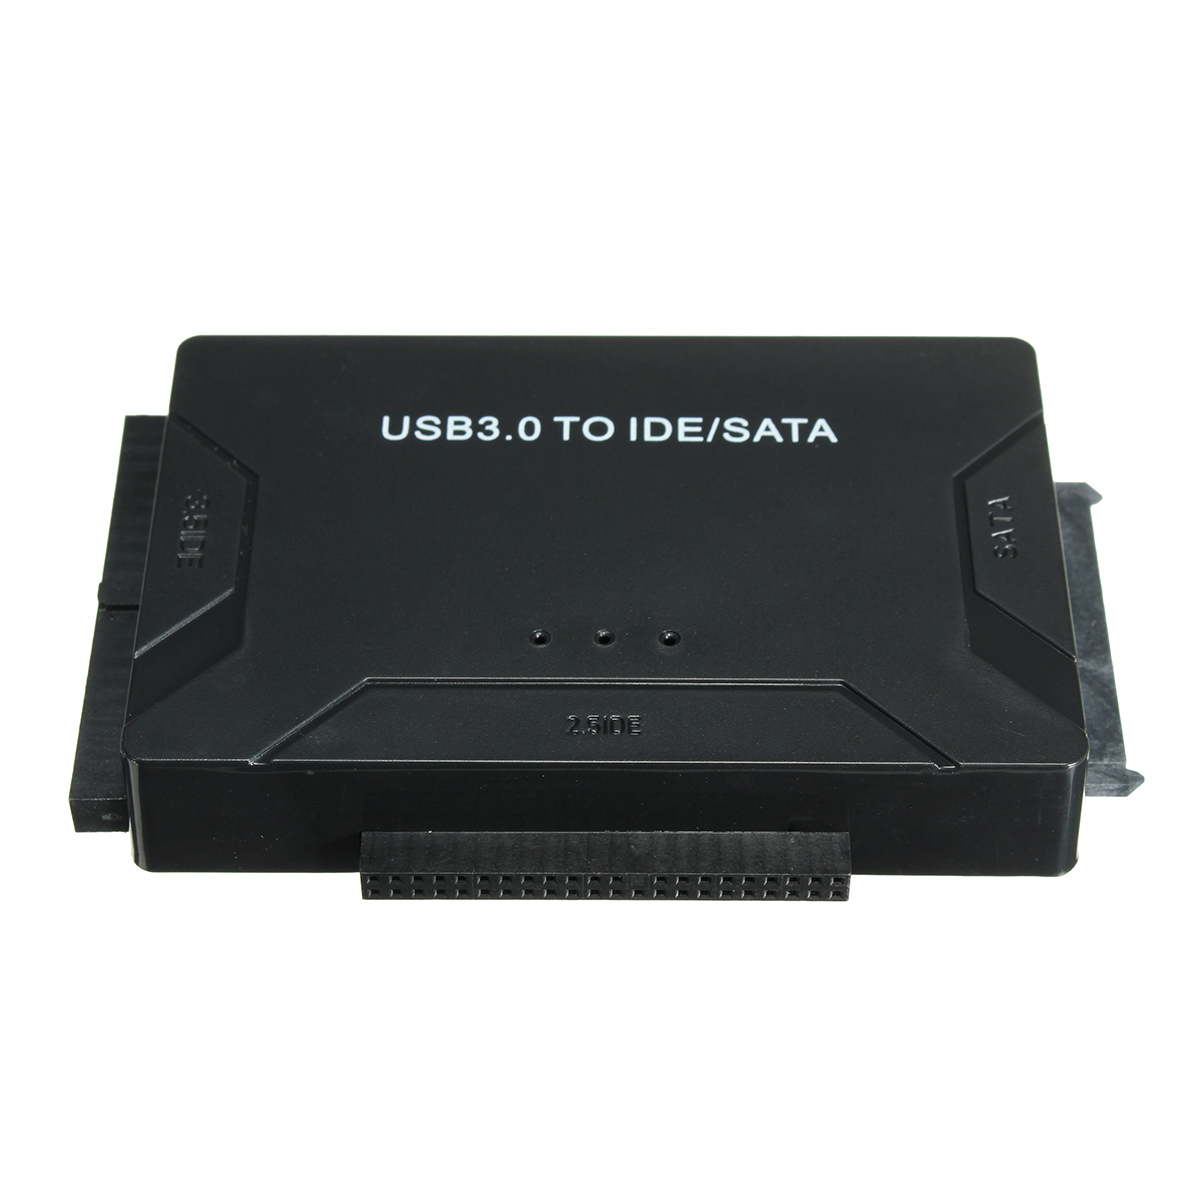 SATA to USB Converter for 3.5-inch Drives. Адаптер ide, SATA 2.5" / 3.5" / на USB 3.0 адаптер жесткого диска. 2.5 Inch to 3.5 inch SSD HDD Adapter. Переходник Type c на под жесткий диск. Pacific drive конвертер